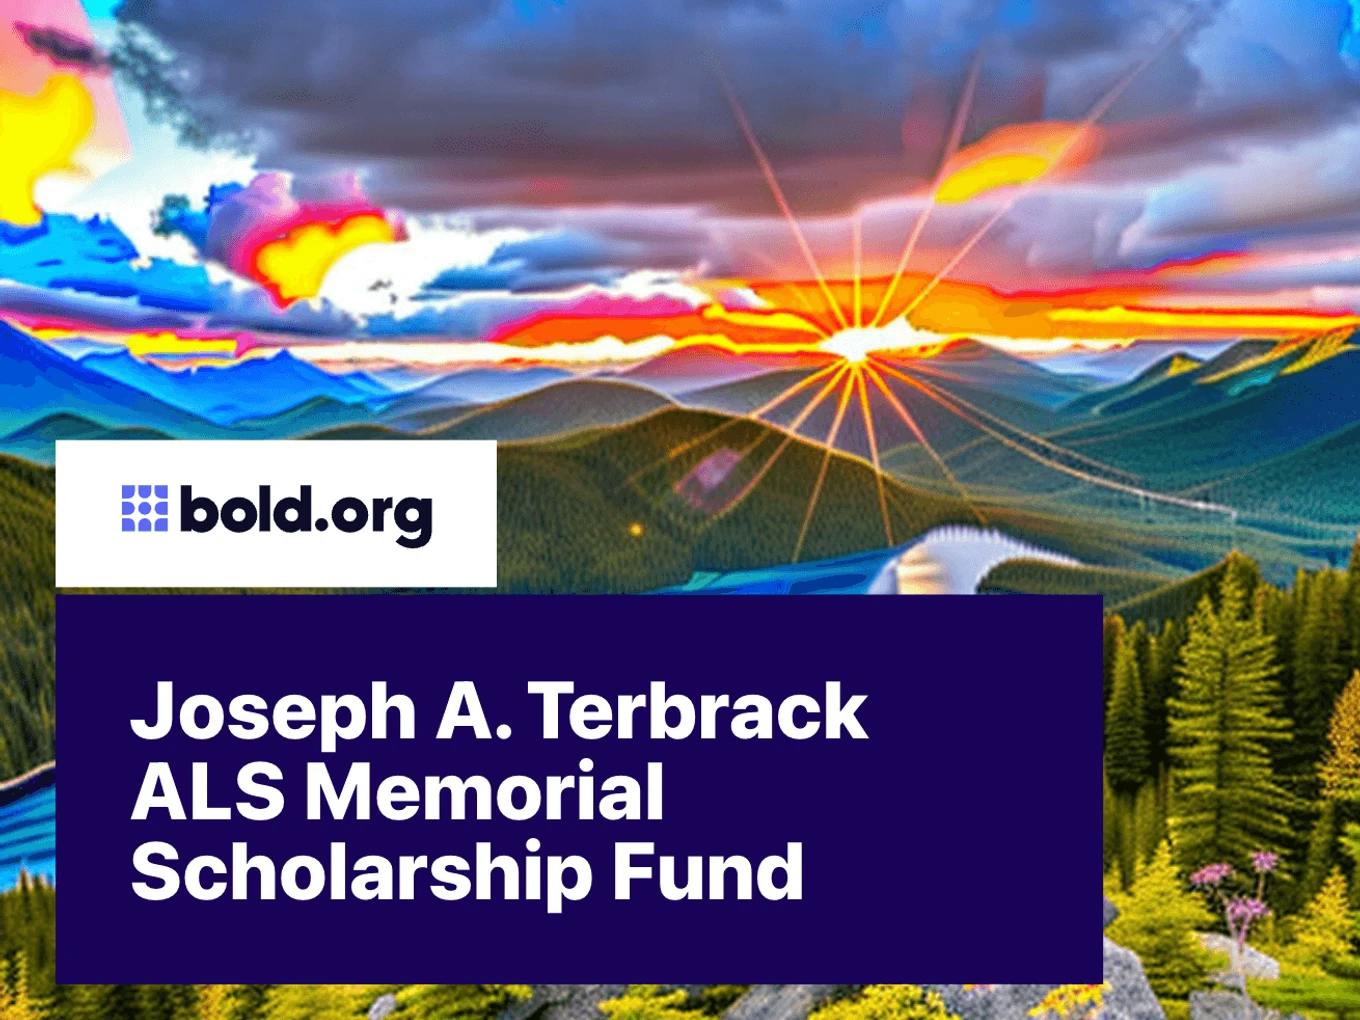 Joseph A. Terbrack ALS Memorial Scholarship Fund